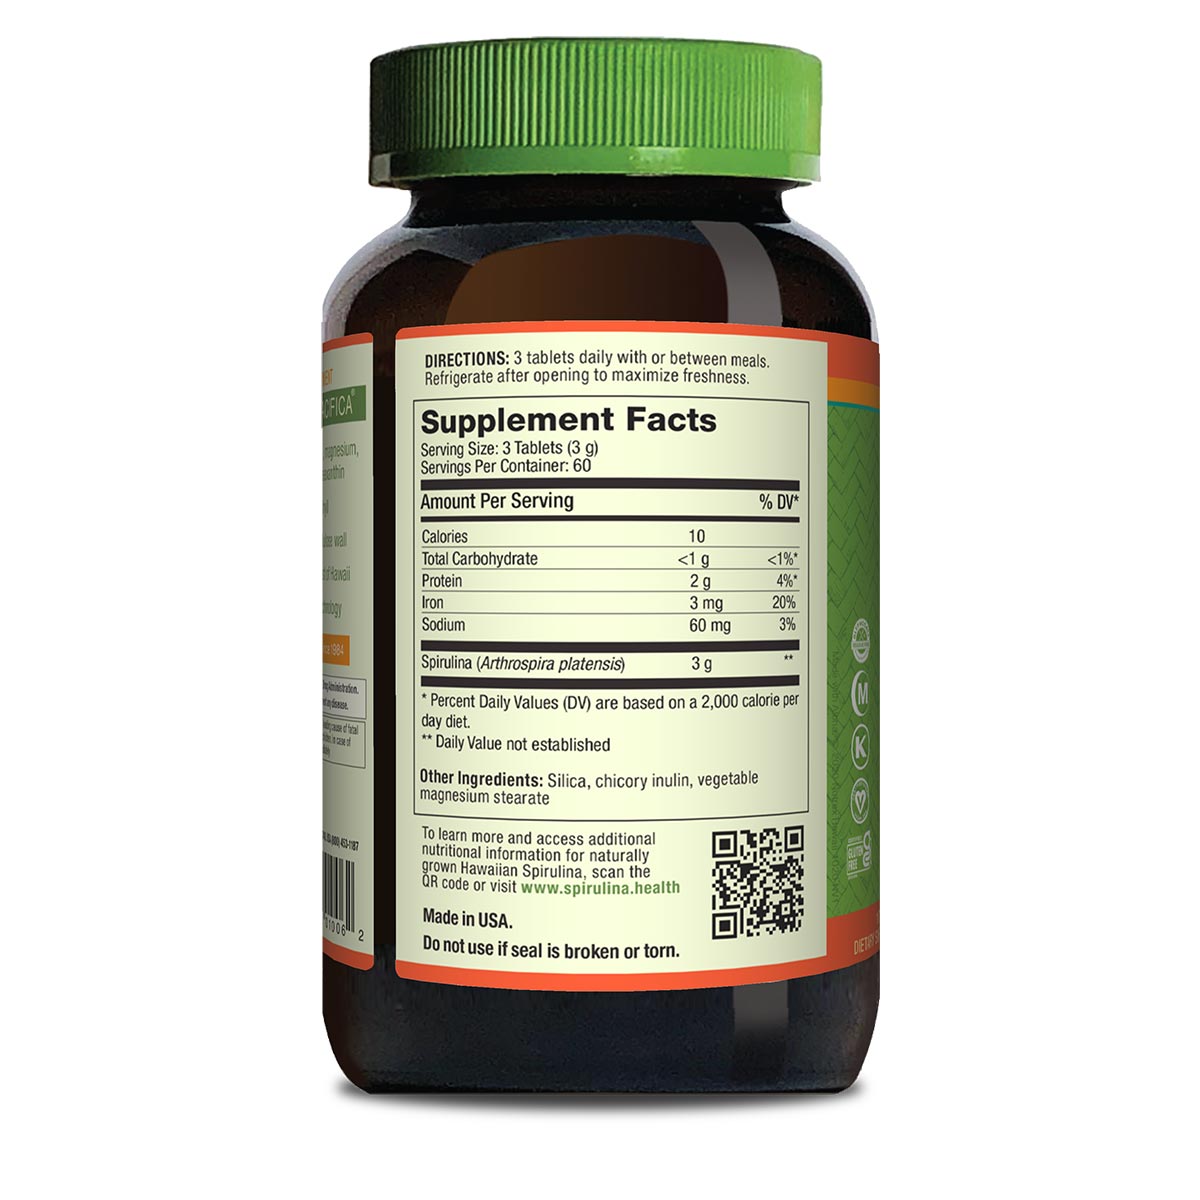 Pack Spirulina – Comprimidos X3 – Eat & Green